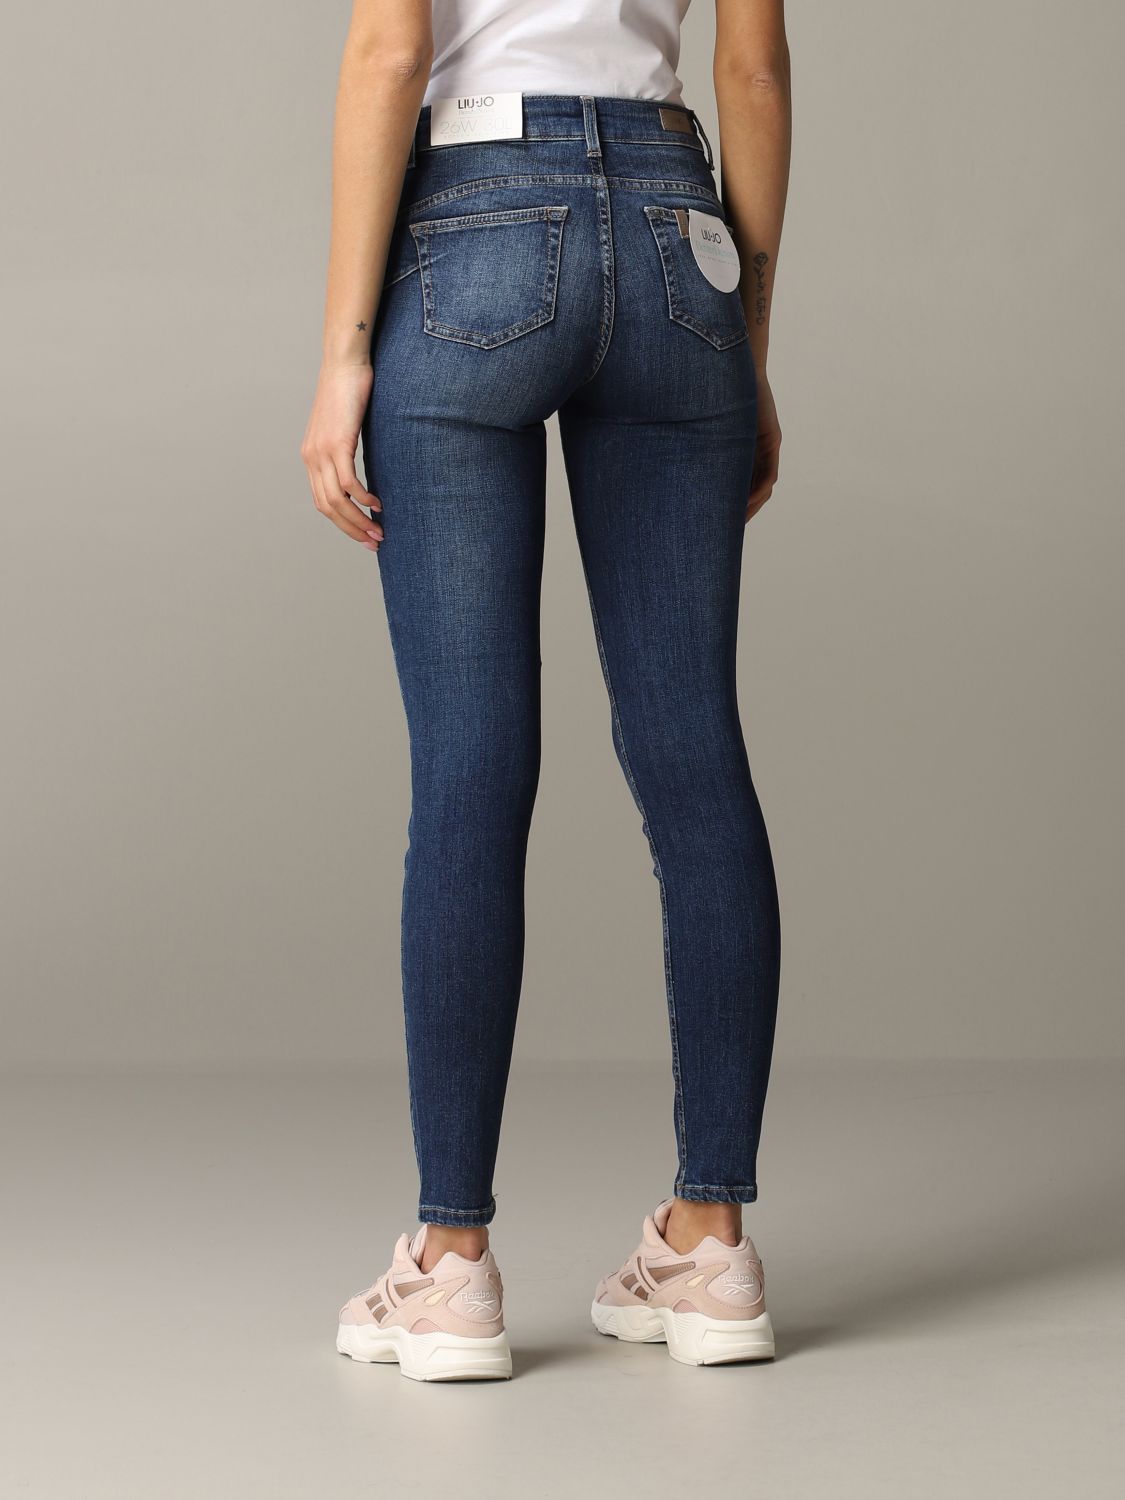 Faceta Convocar Ventana mundial Liu Jo Outlet: slim fit jeans - Denim | Liu Jo jeans UA0013D4456 online on  GIGLIO.COM